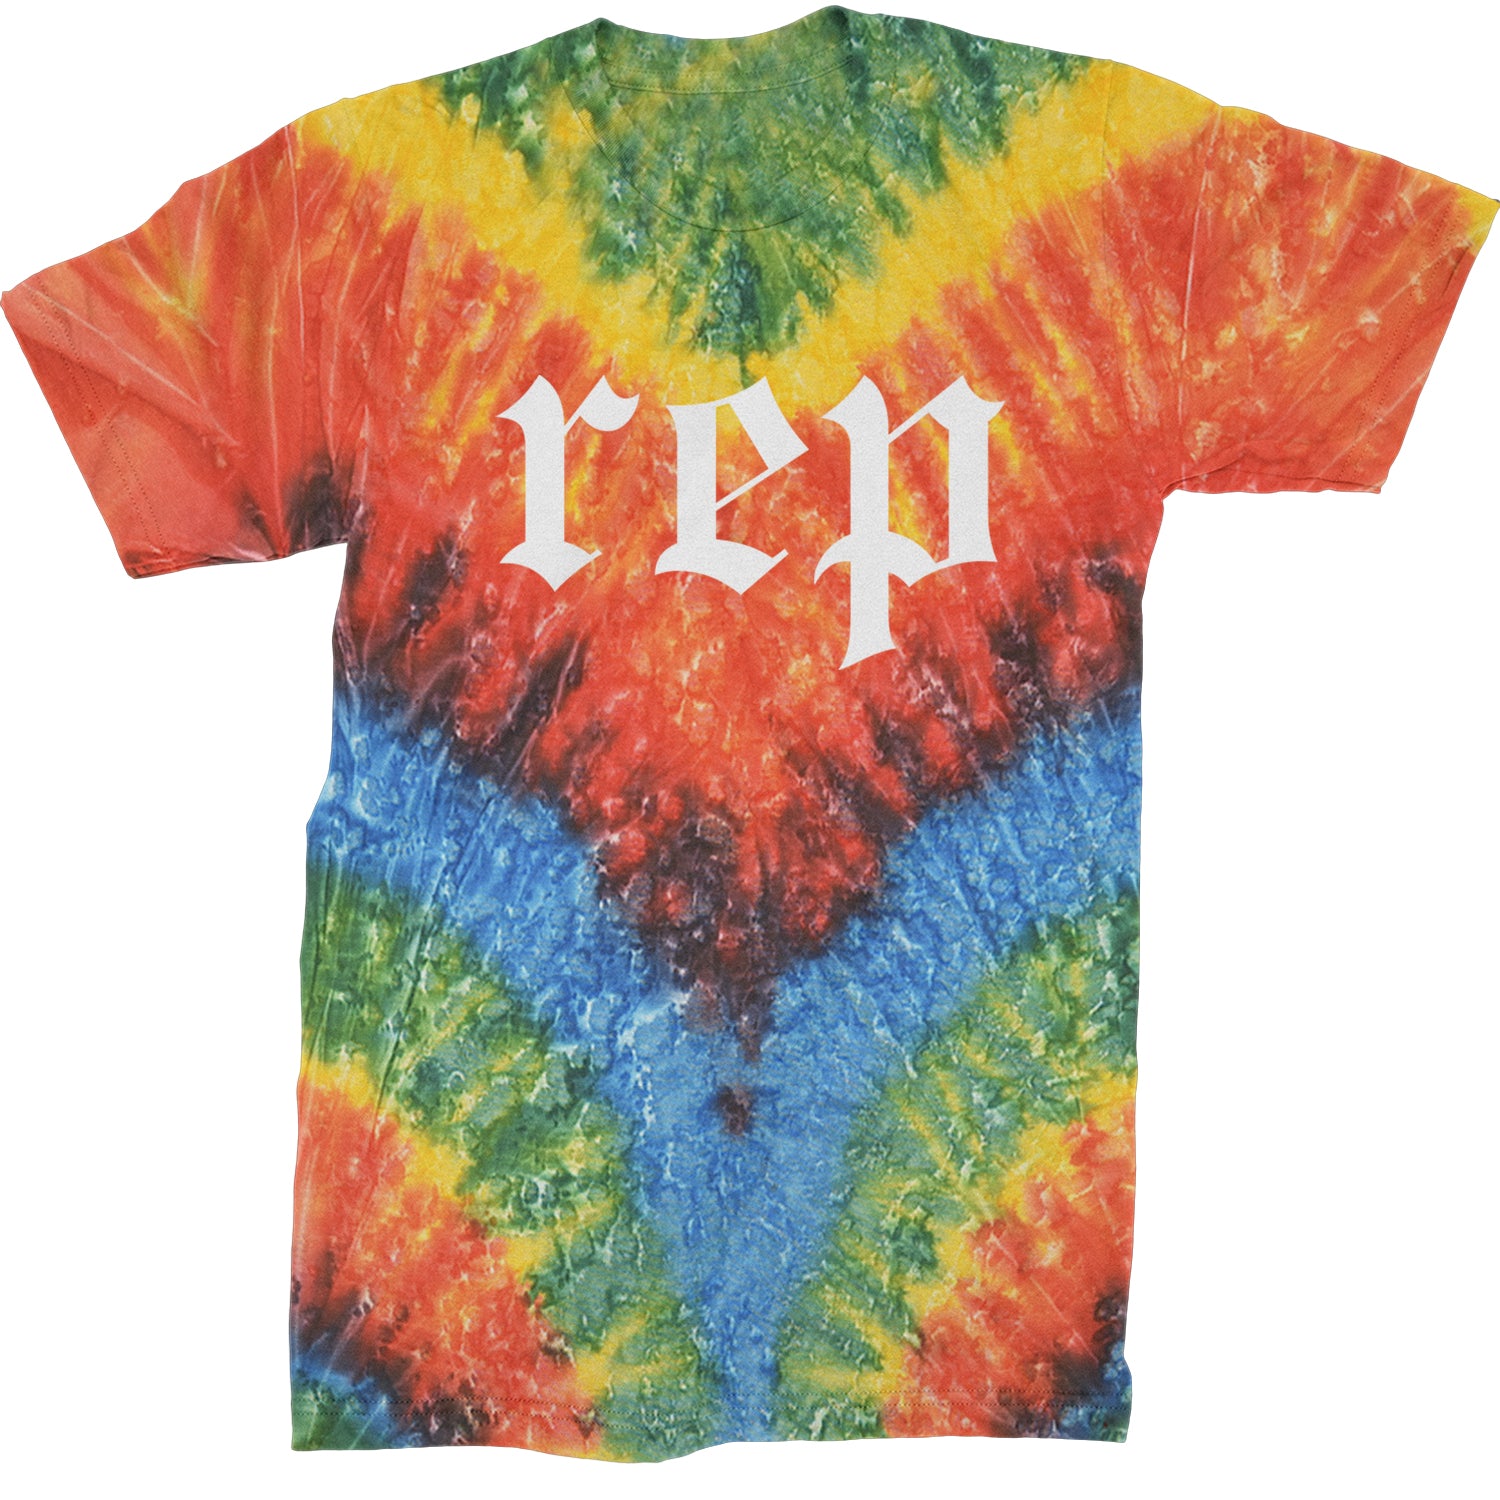 REP Reputation Eras Music Lover Gift Fan Favorite Mens T-shirt Tie-Dye Woodstock